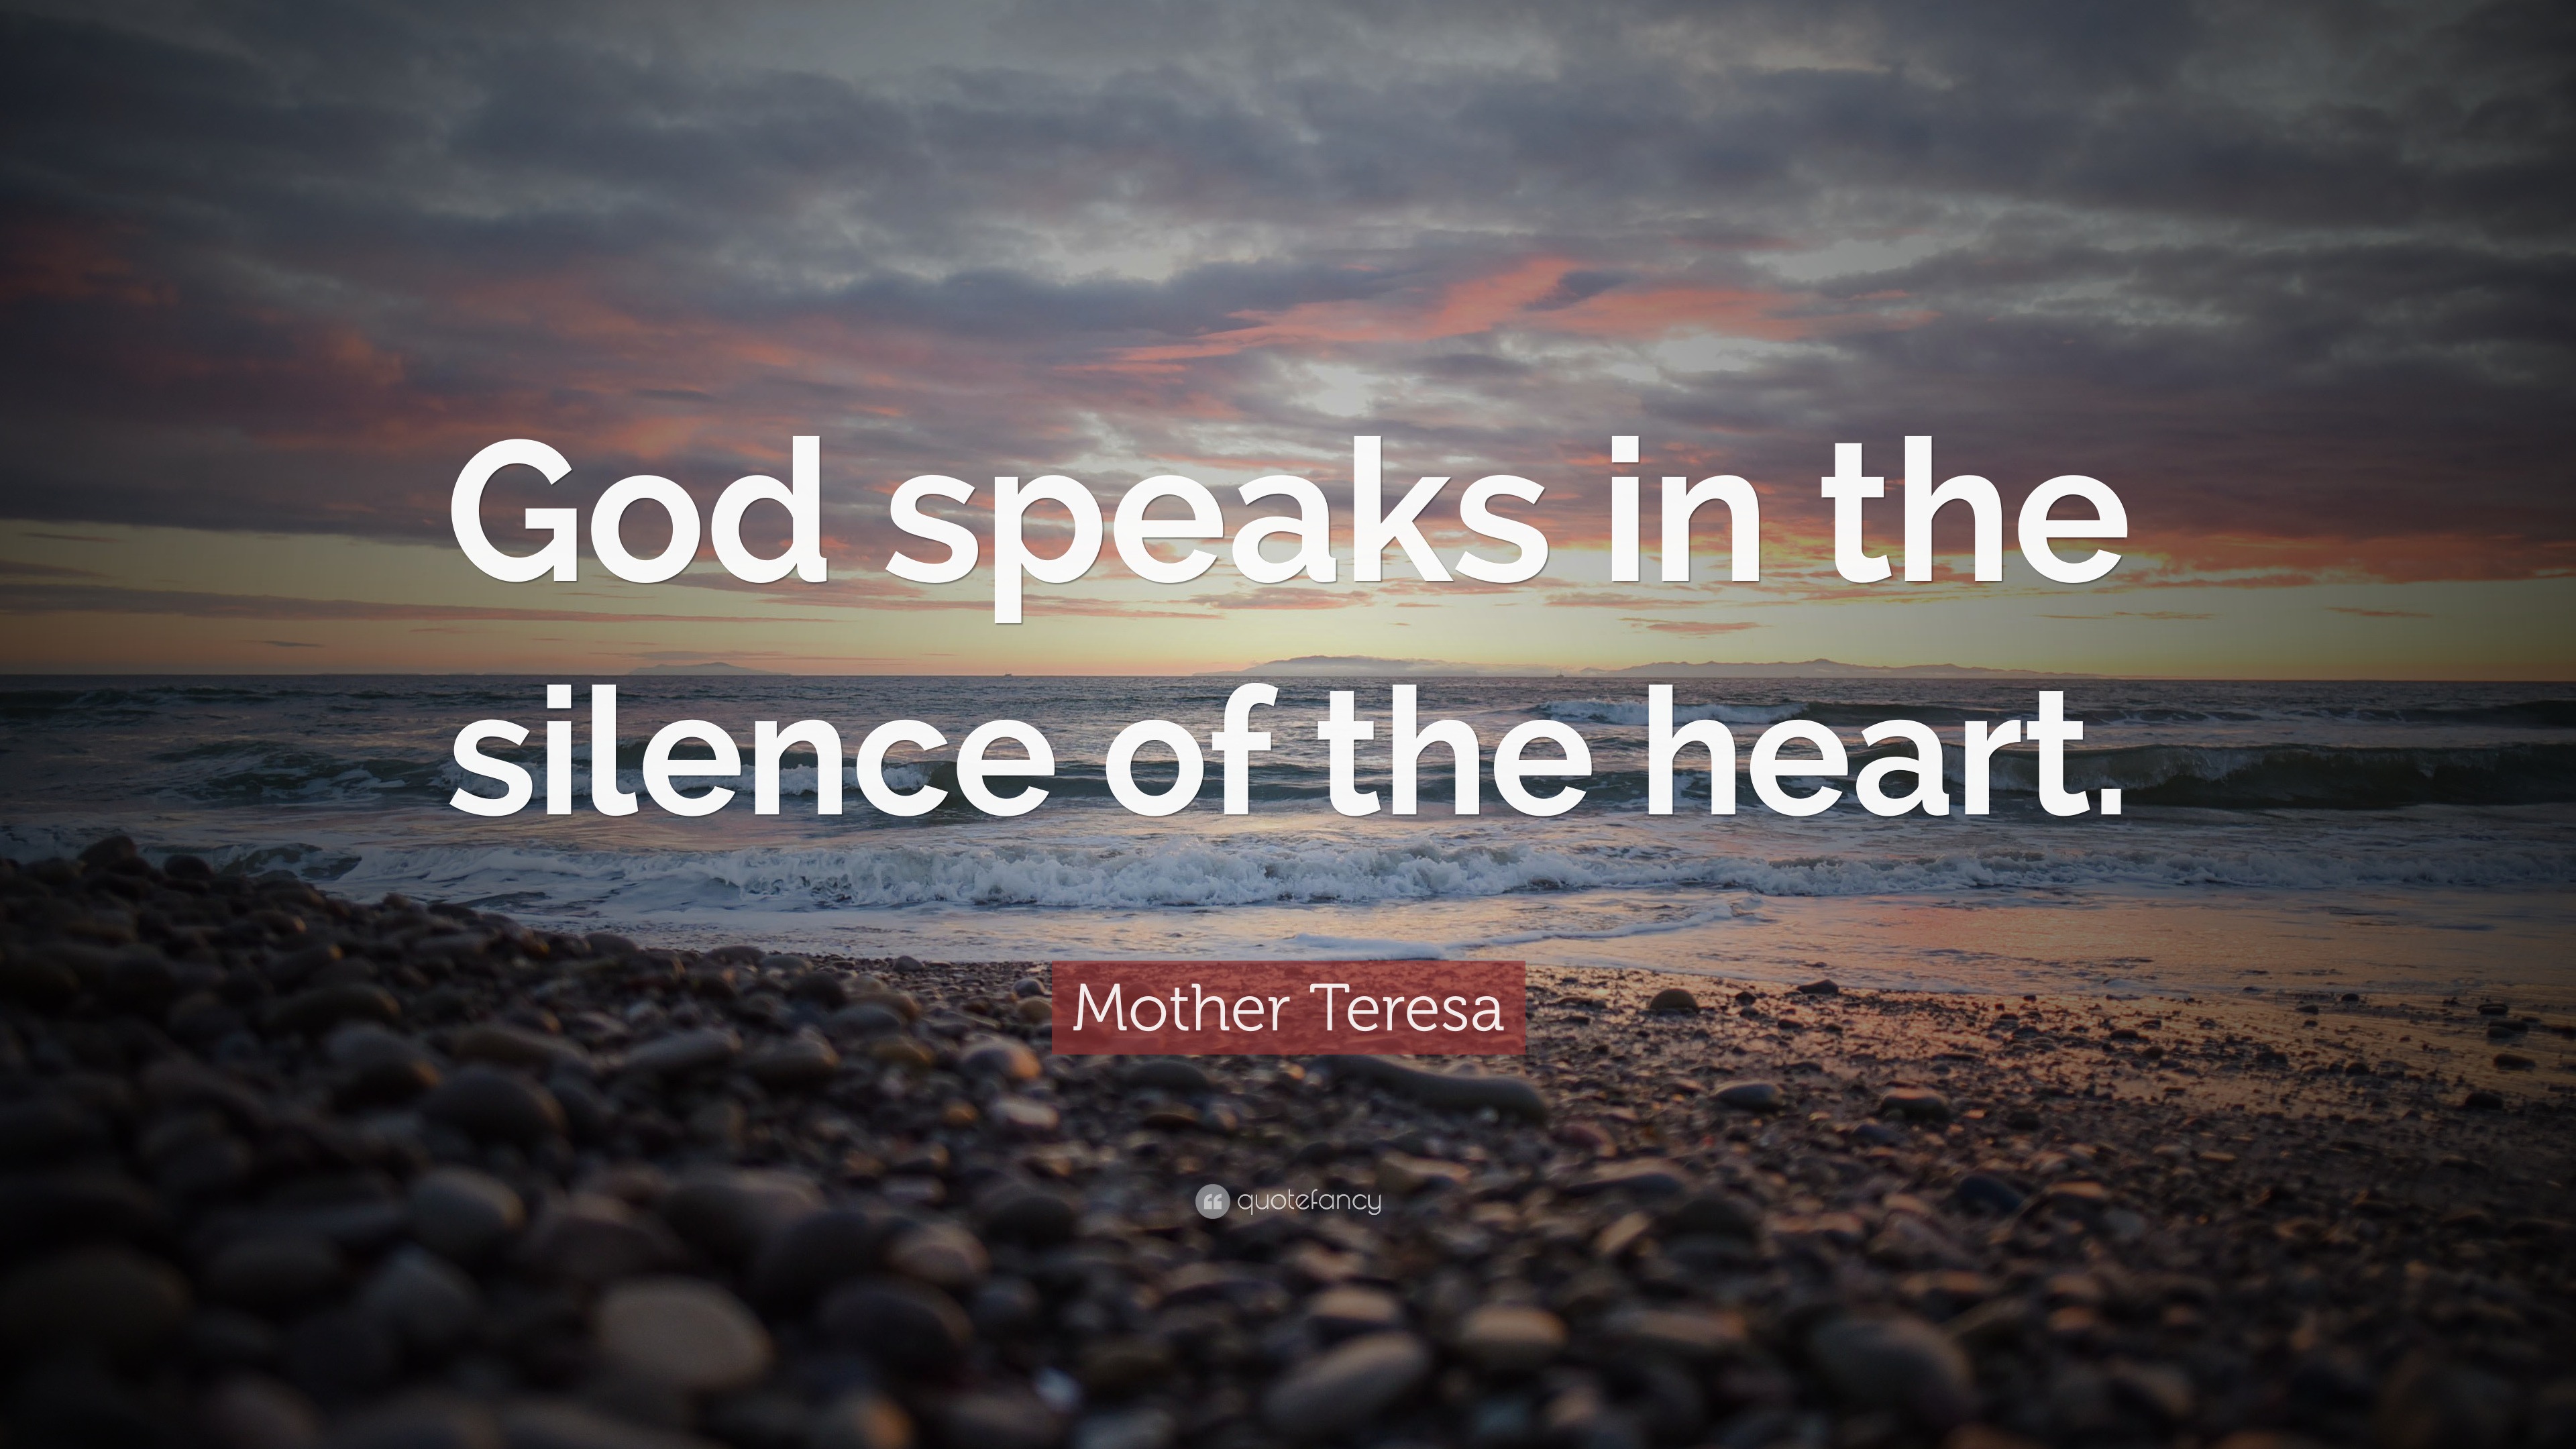 Mother Teresa Quote: 